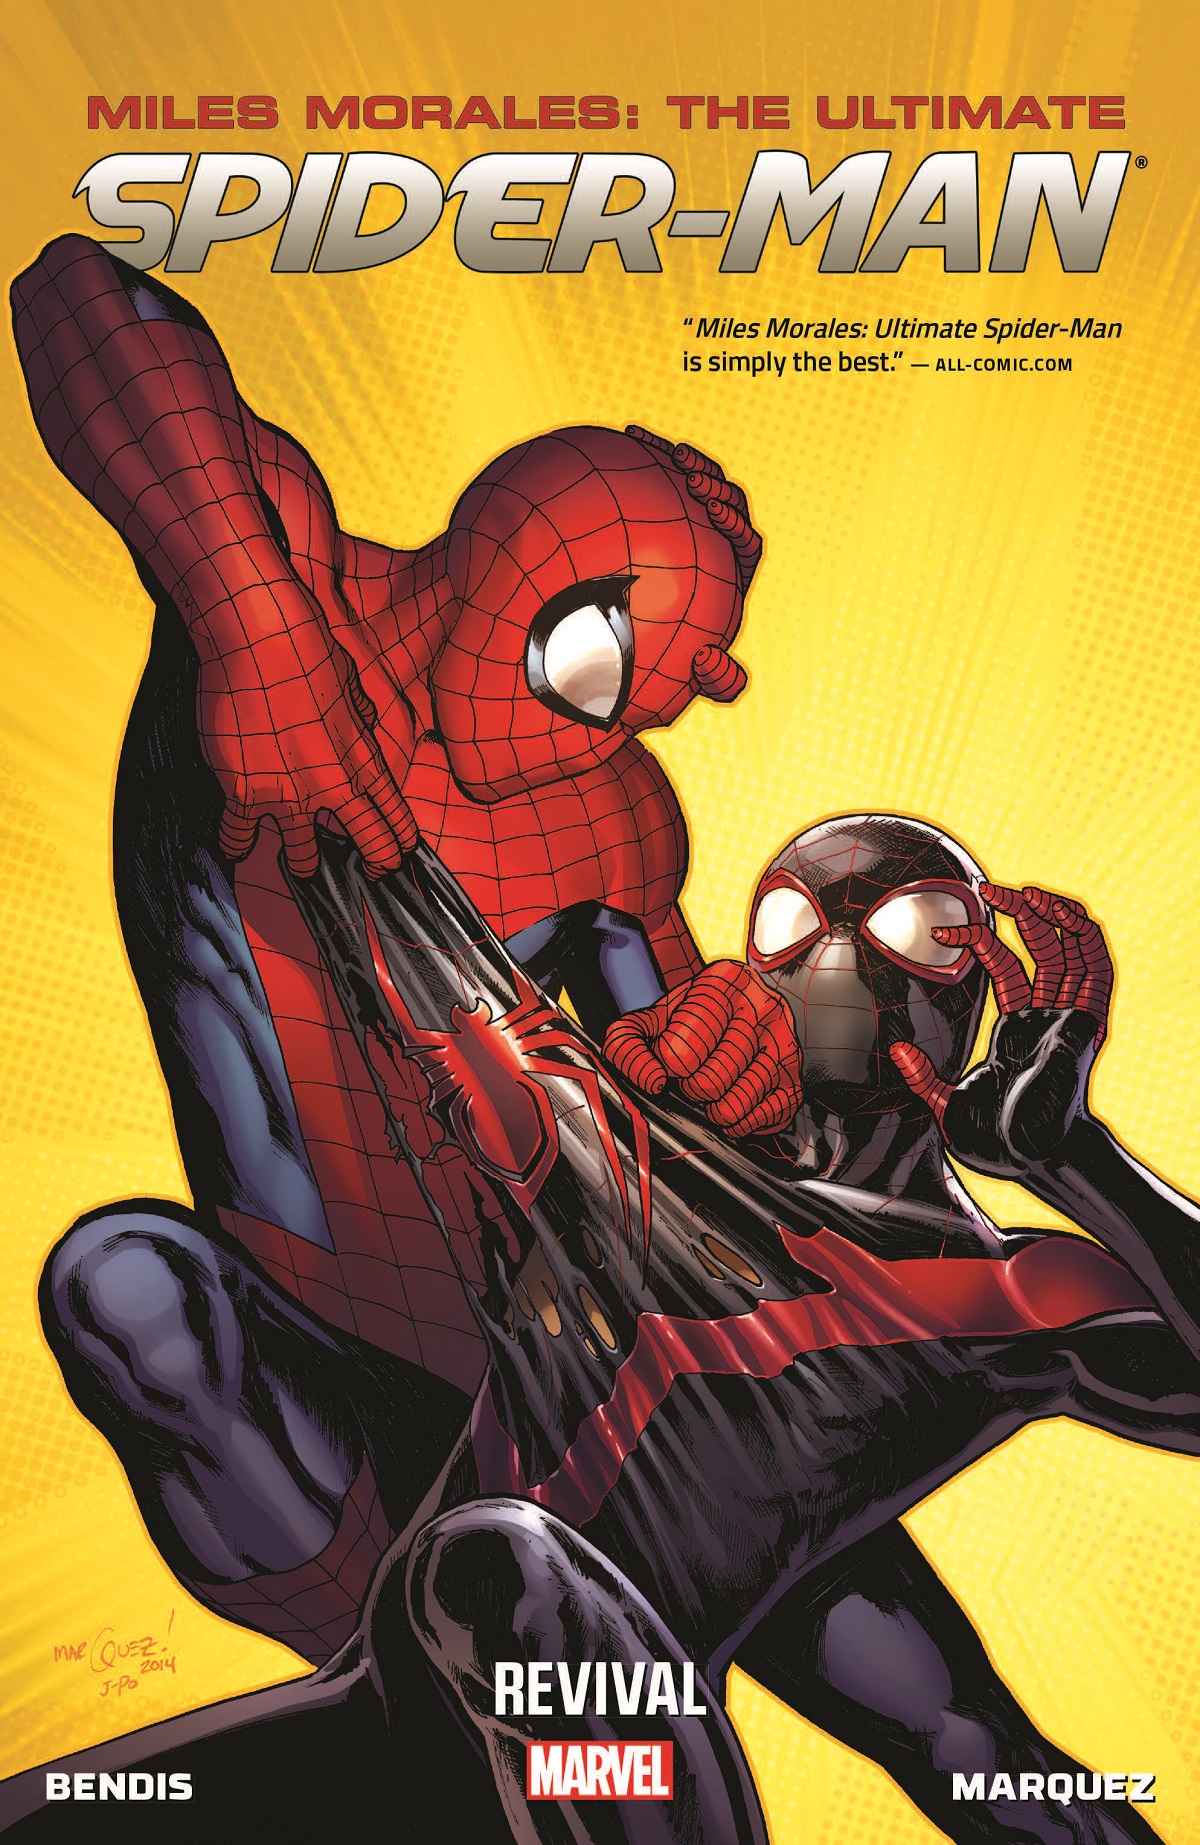 Miles Morales Ultimate SpiderMan Vol. 1 Revival (Trade Paperback